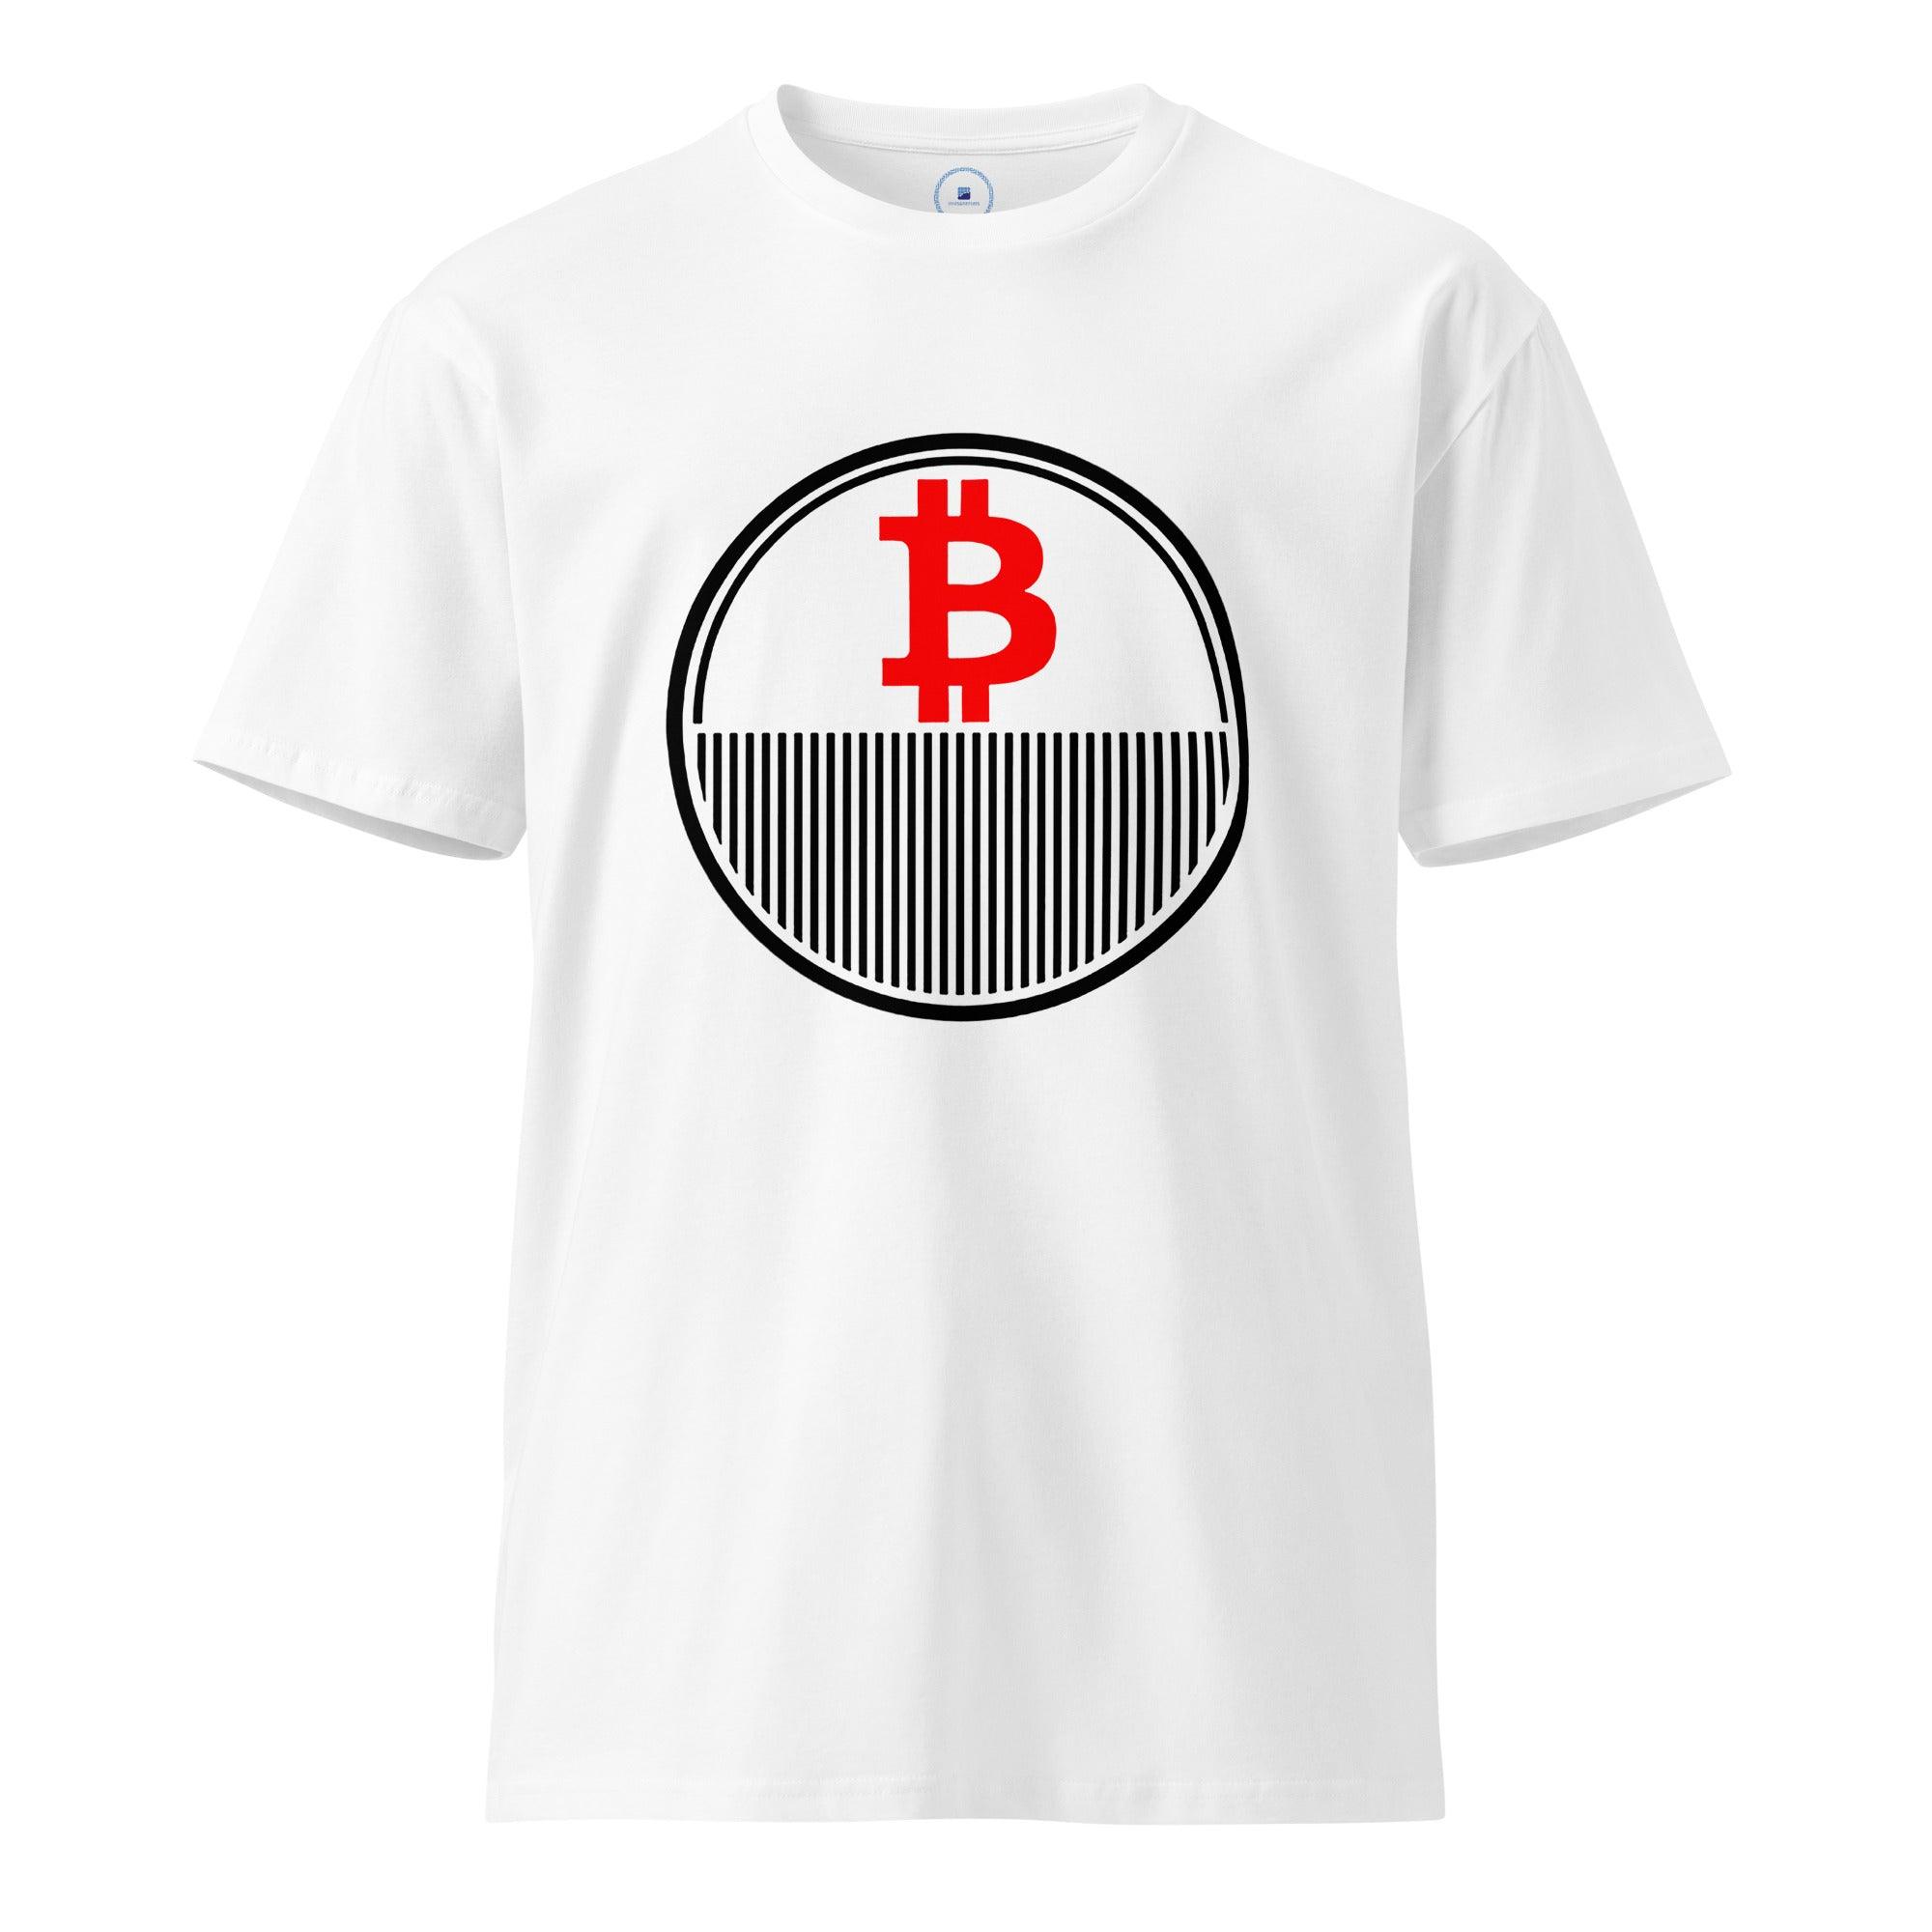 Bitcoin Grates T-Shirt - InvestmenTees